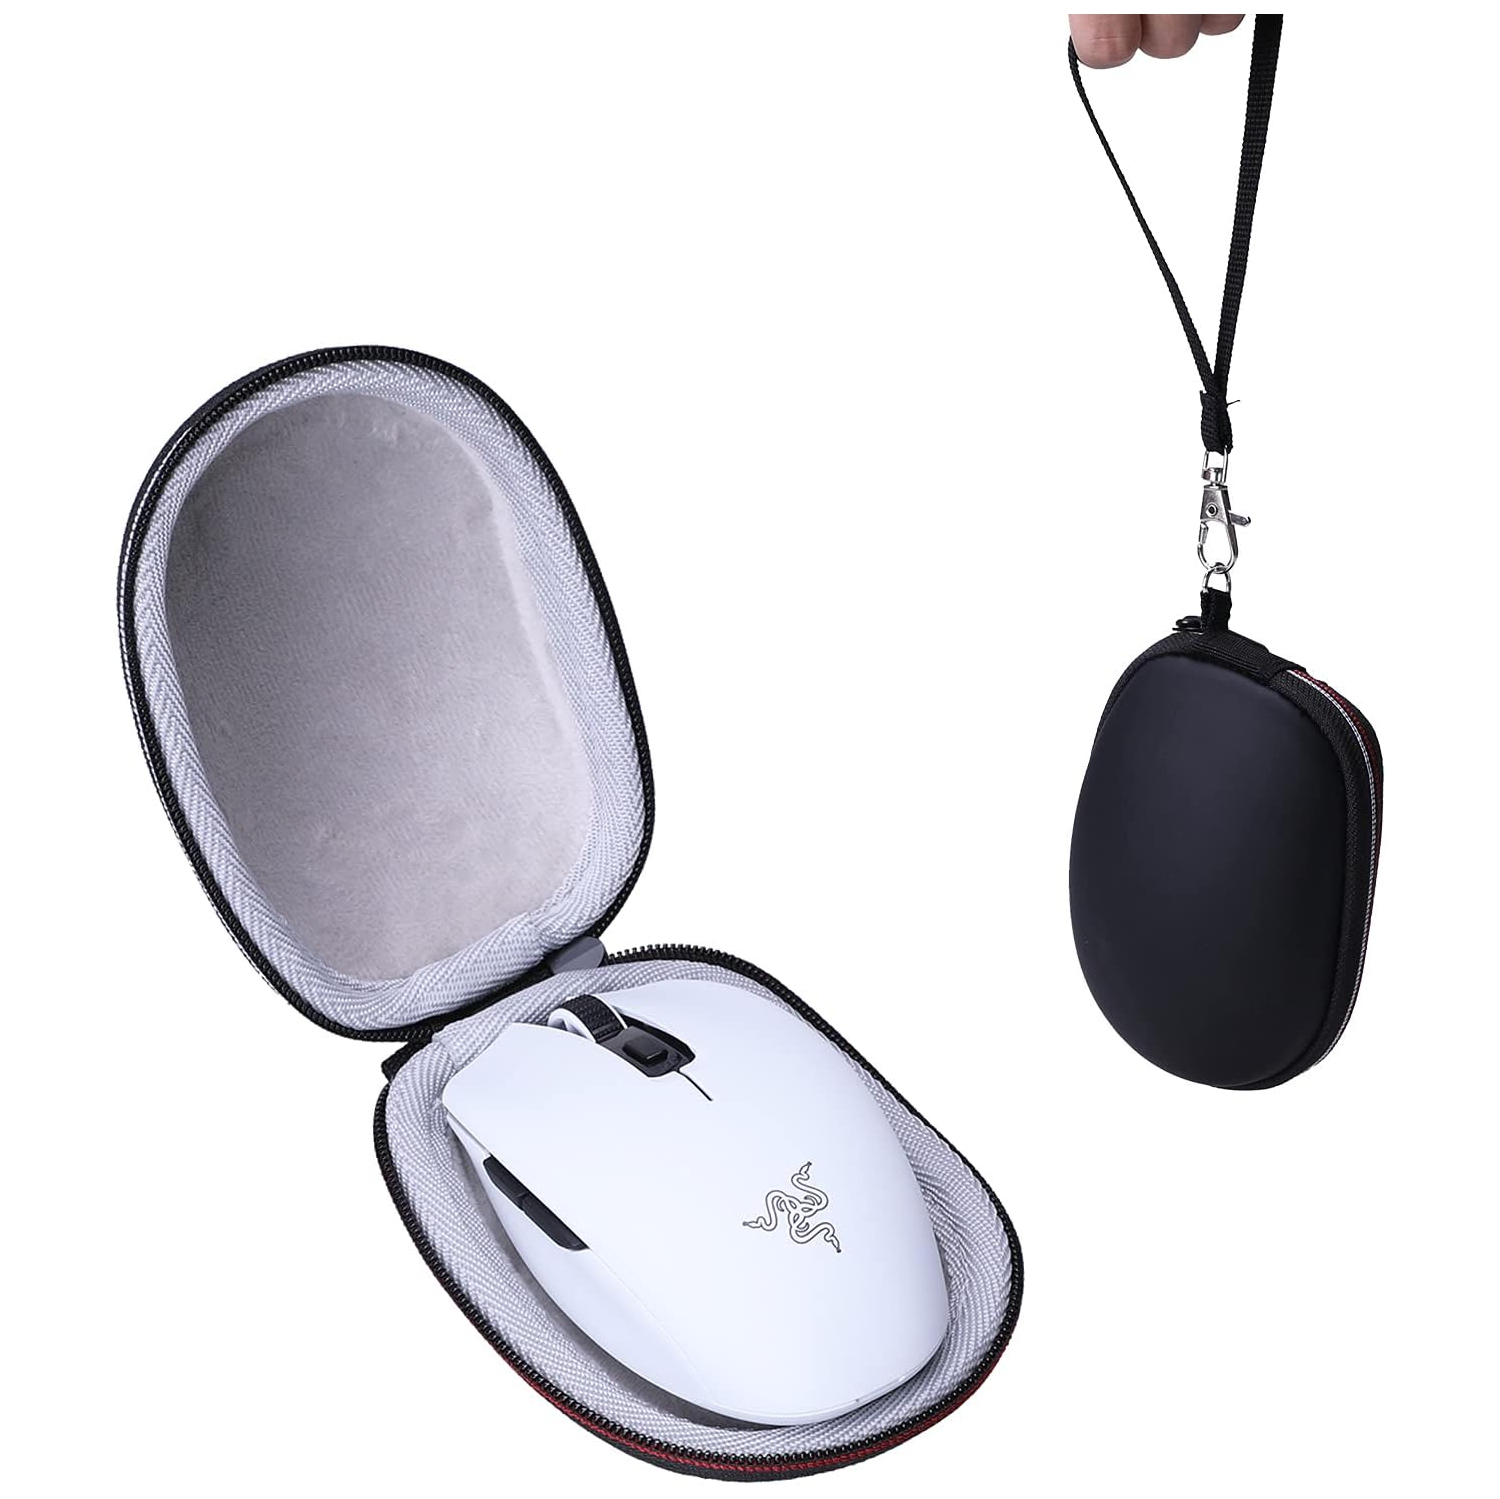 Travel Case for Razer Orochi V2 or Logitech G705 Mobile Wireless Gaming Mouse - Carrying Organizer Storage Bag